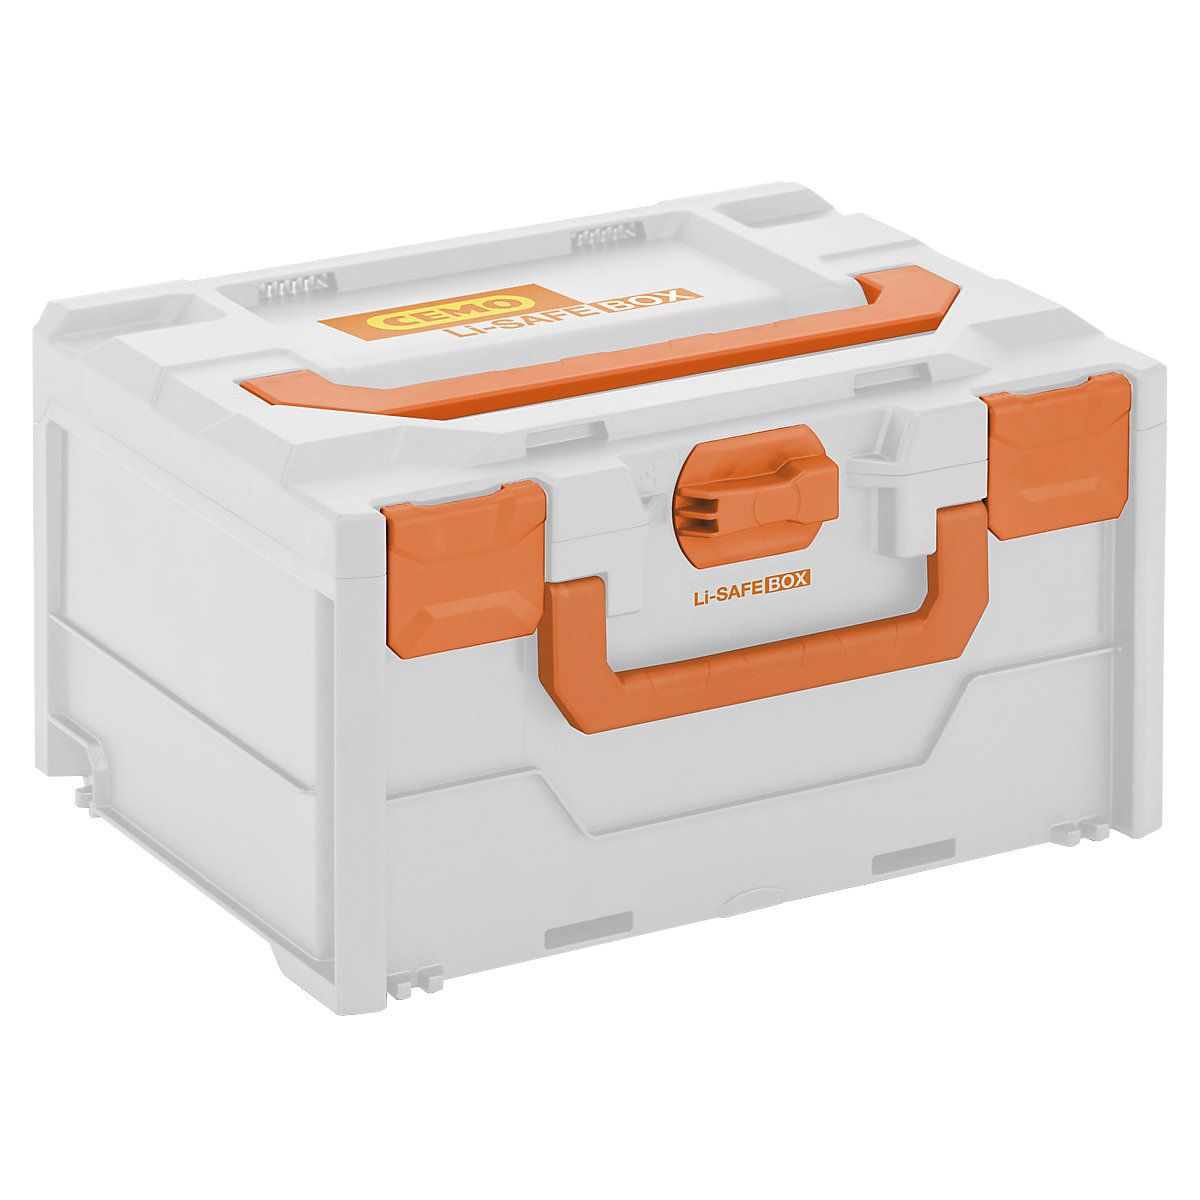 Caja de protección de baterías contra incendios Li-SAFE - CEMO